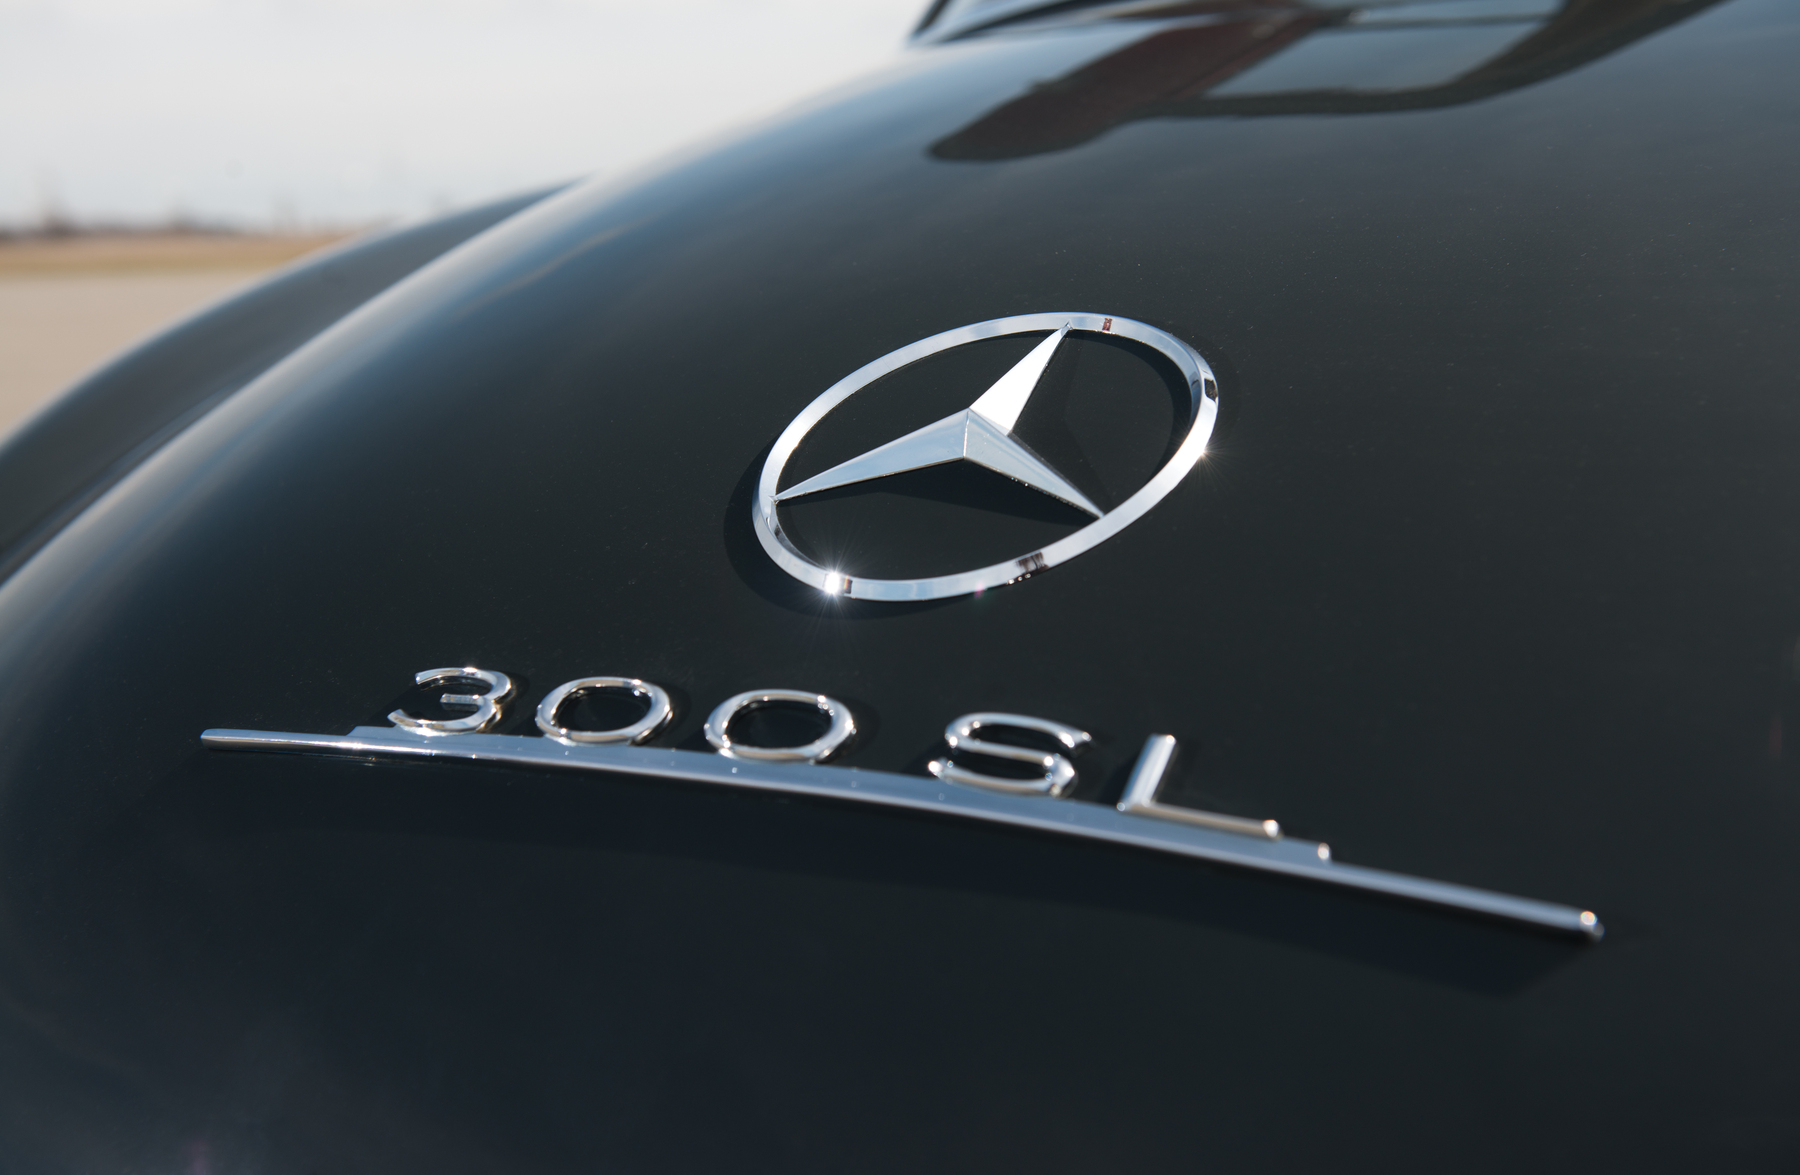 Mercedes-Benz 車尾的 300 SL 字樣訴說不凡定位，內部的空間則可放置備用輪胎或行李。